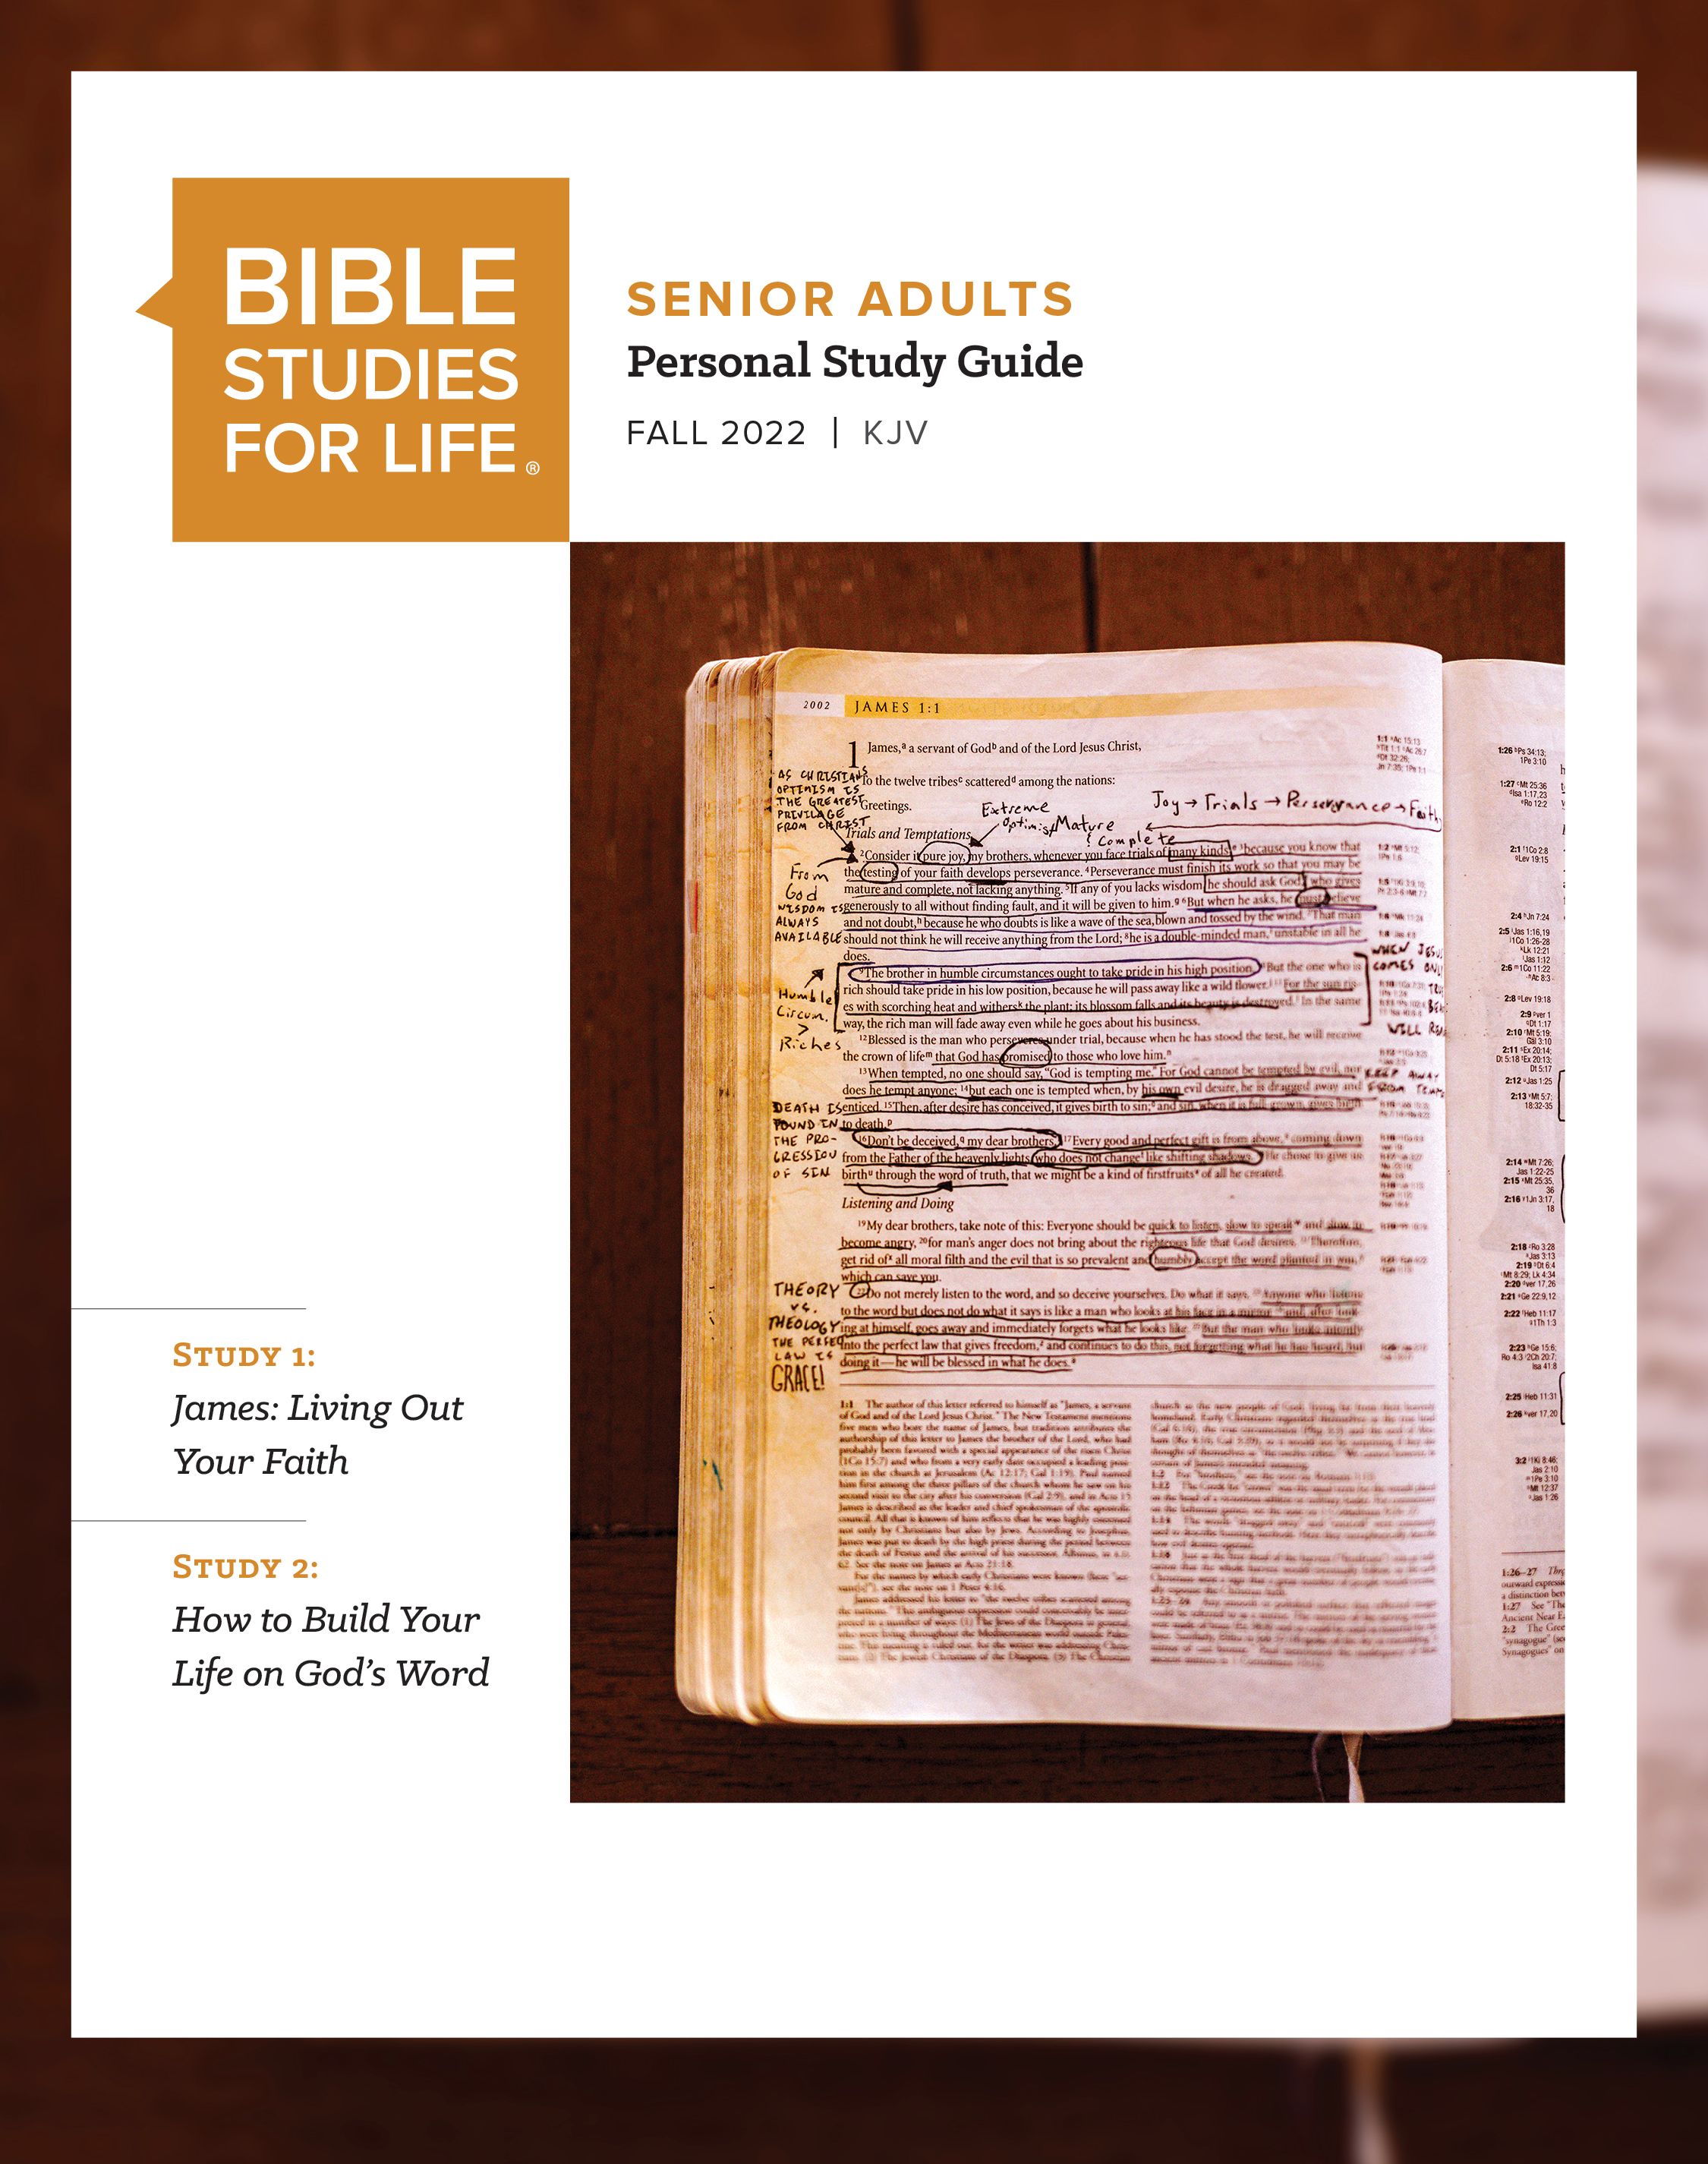 Bible Studies for Life